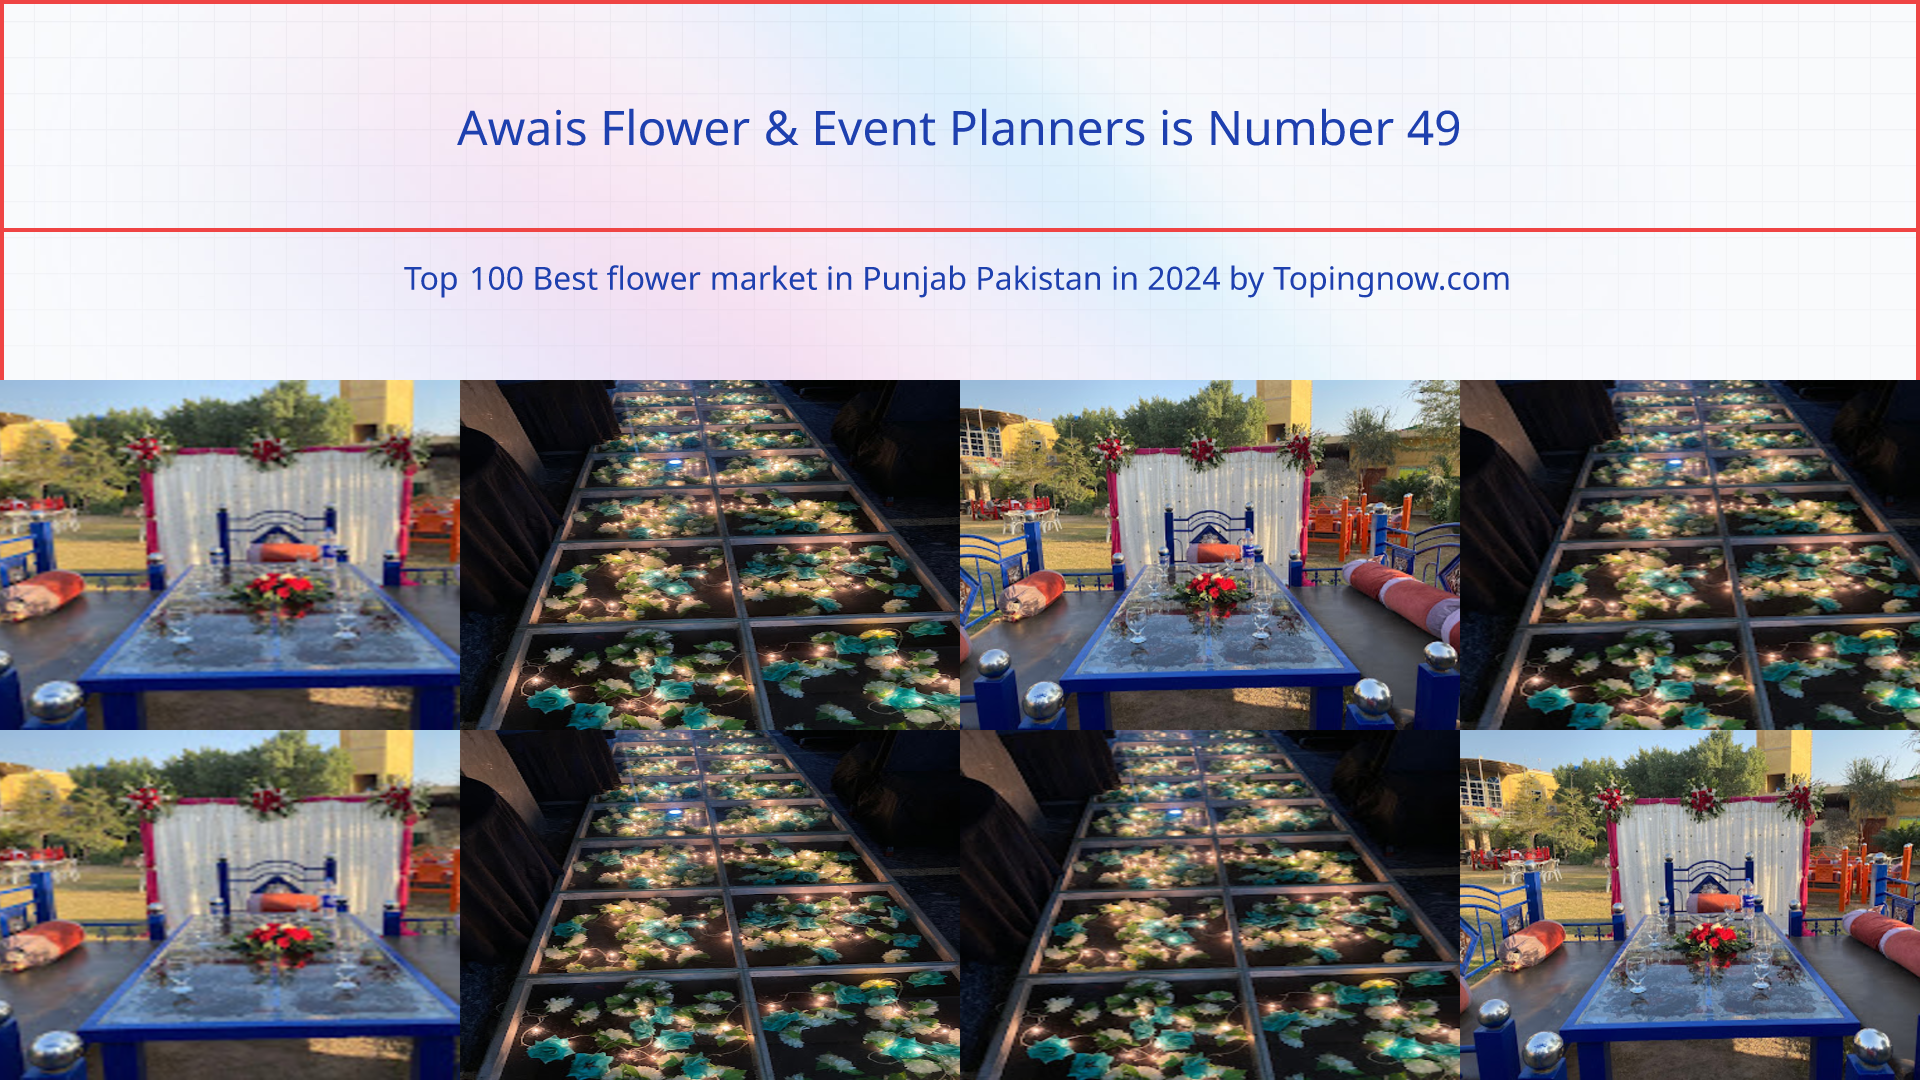 Awais Flower & Event Planners: Top 100 Best flower market in Punjab Pakistan in 2024